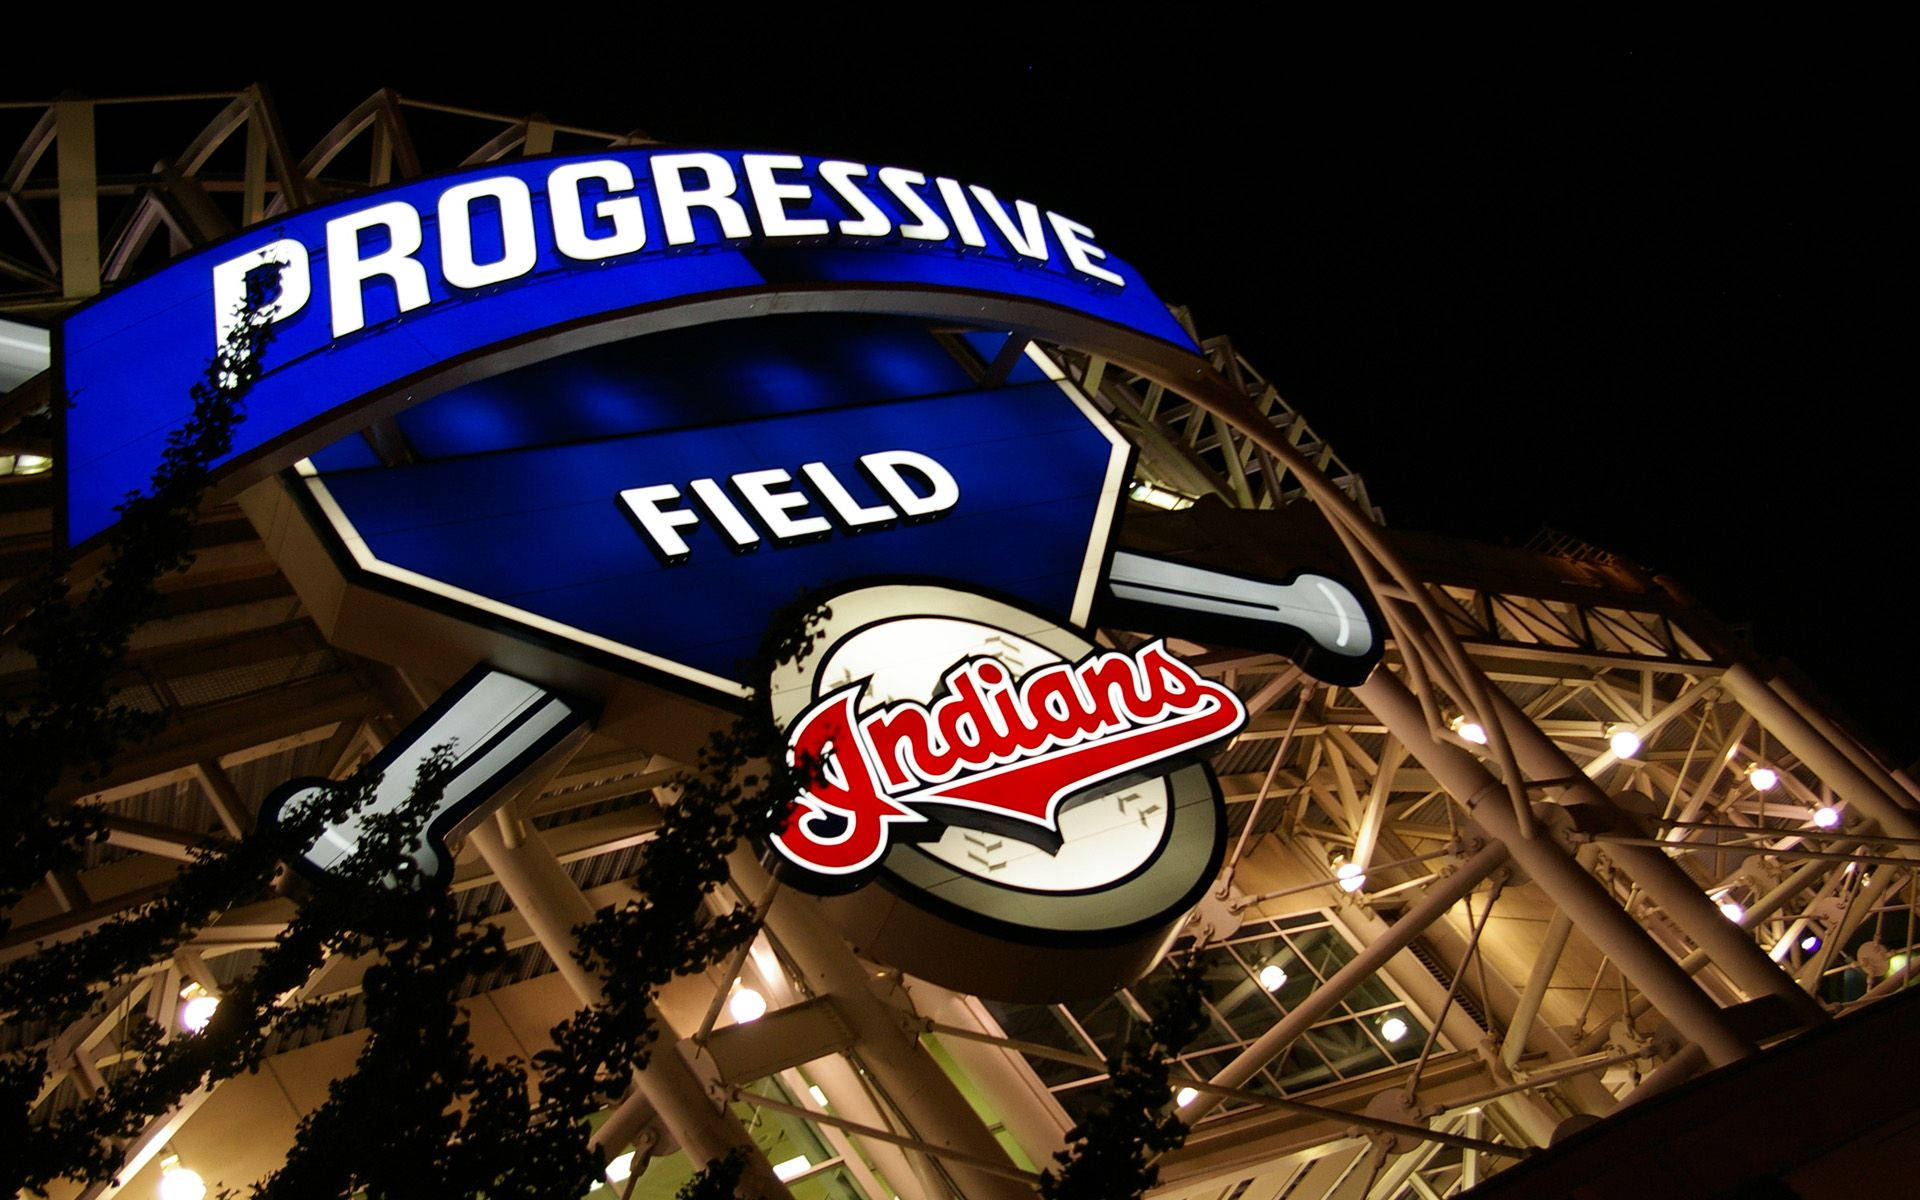 Cleveland Indians Progressive Field Entrance